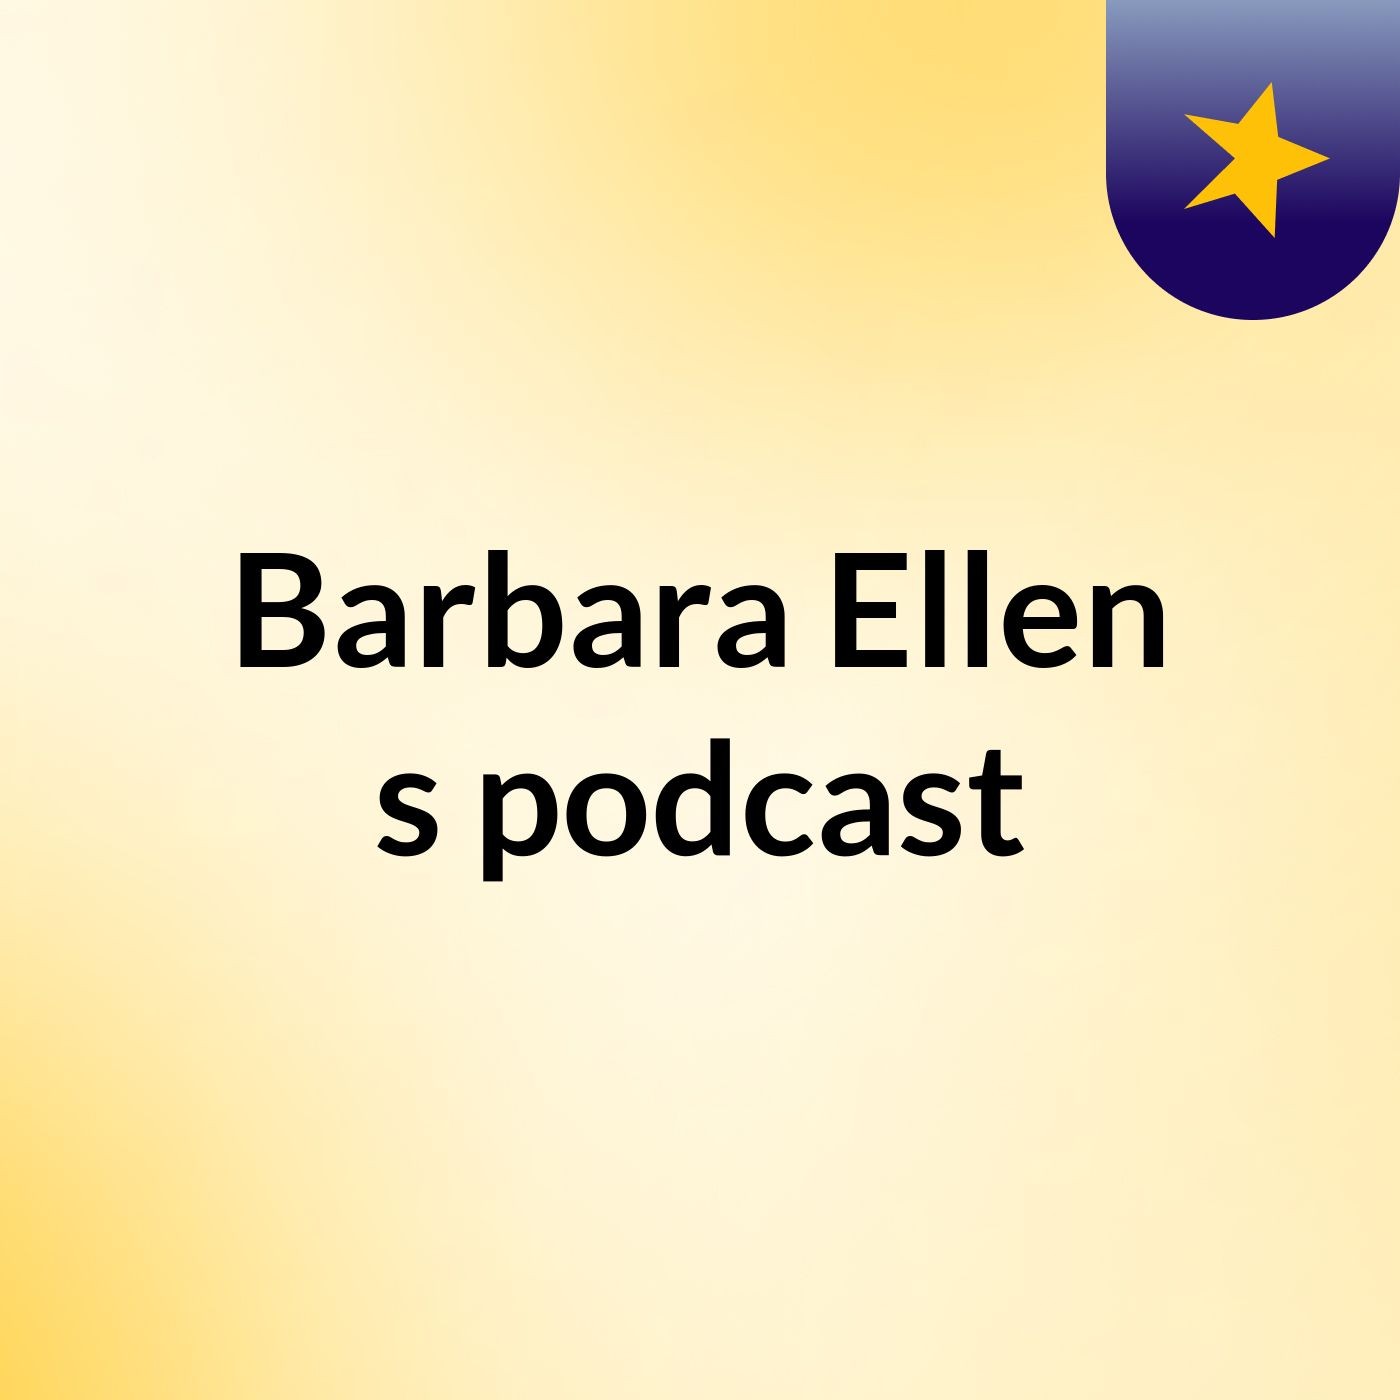 Barbara Ellen's podcast